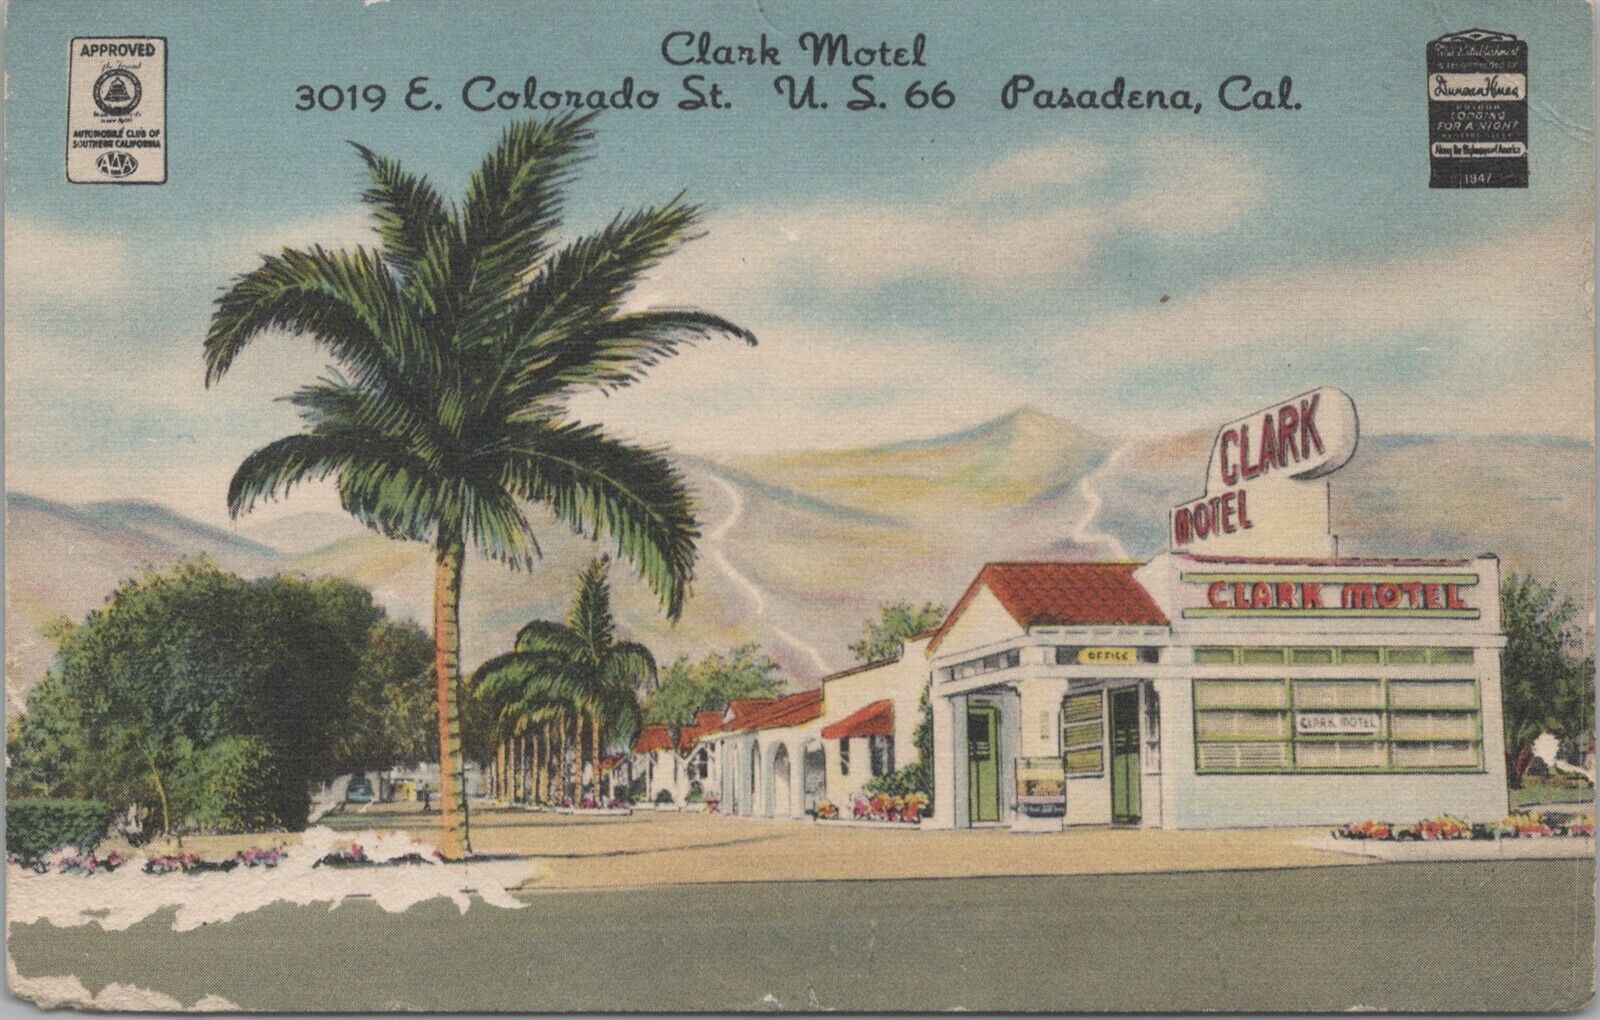 Pasadena CA The Clark Motel 3019 E Colorado St on Route 66 1953